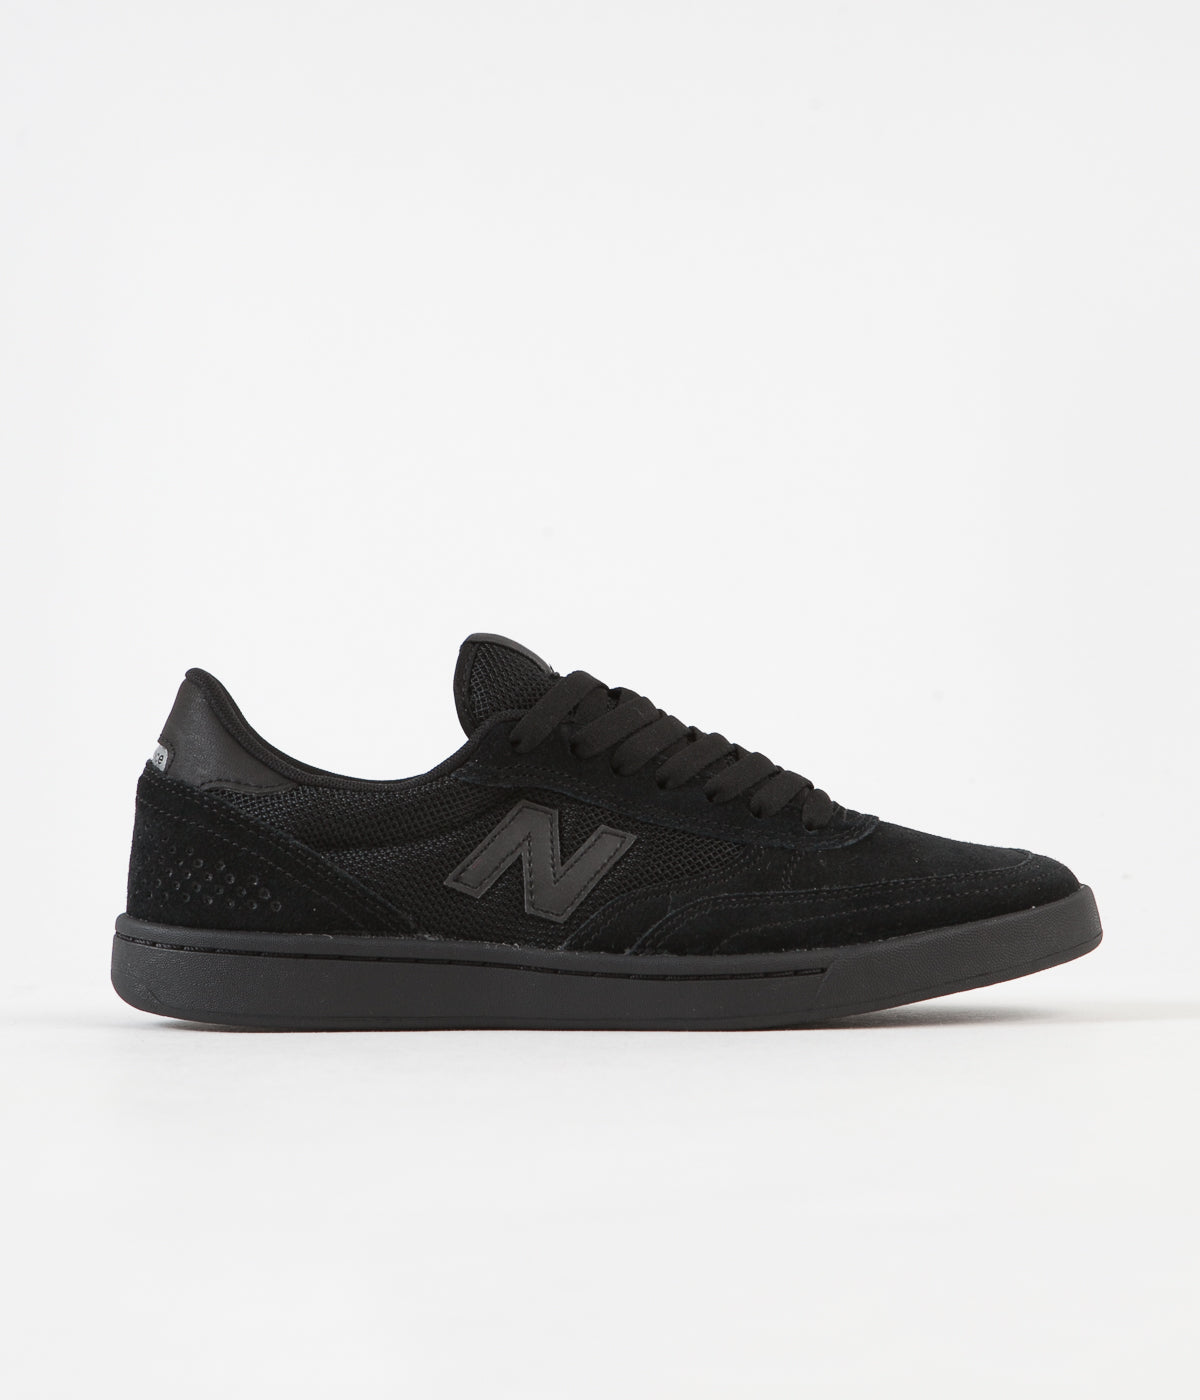 all black new balance skate shoes